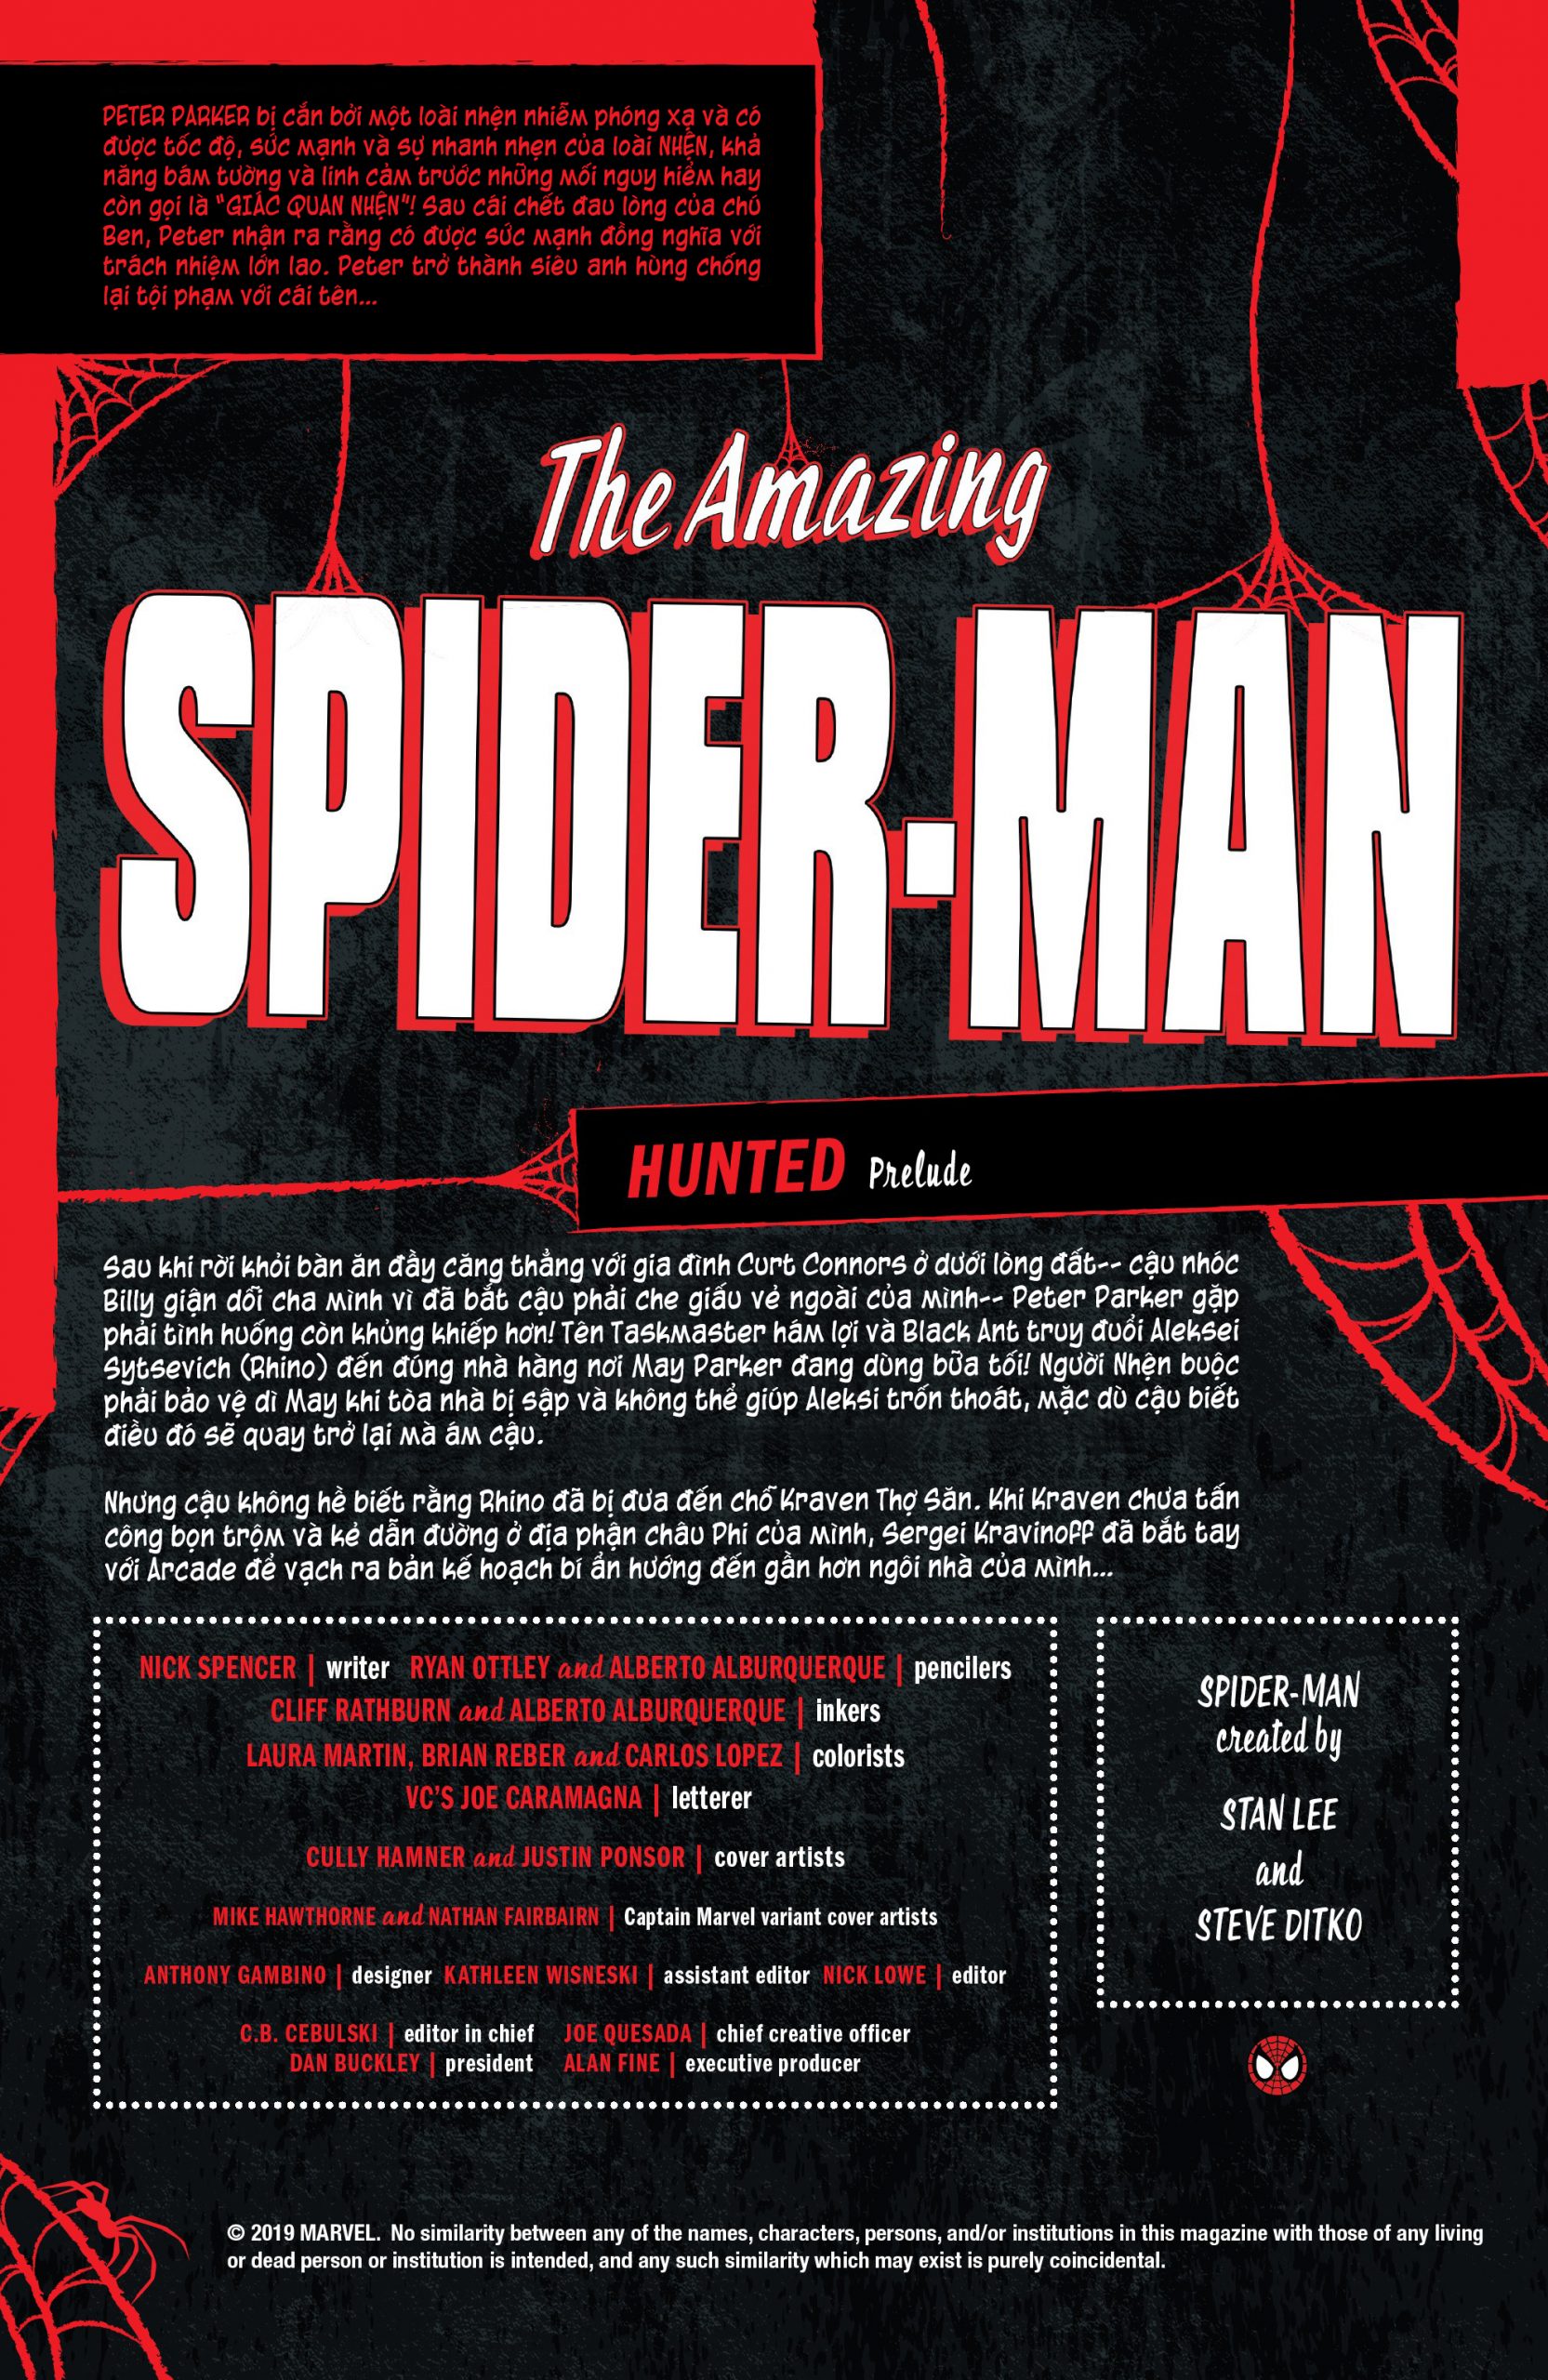 https://langgeek.net/wp-content/webpc-passthru.php?src=https://langgeek.net/wp-content/uploads/2022/01/Amazing-Spider-Man-016-003-scaled.jpg&nocache=1